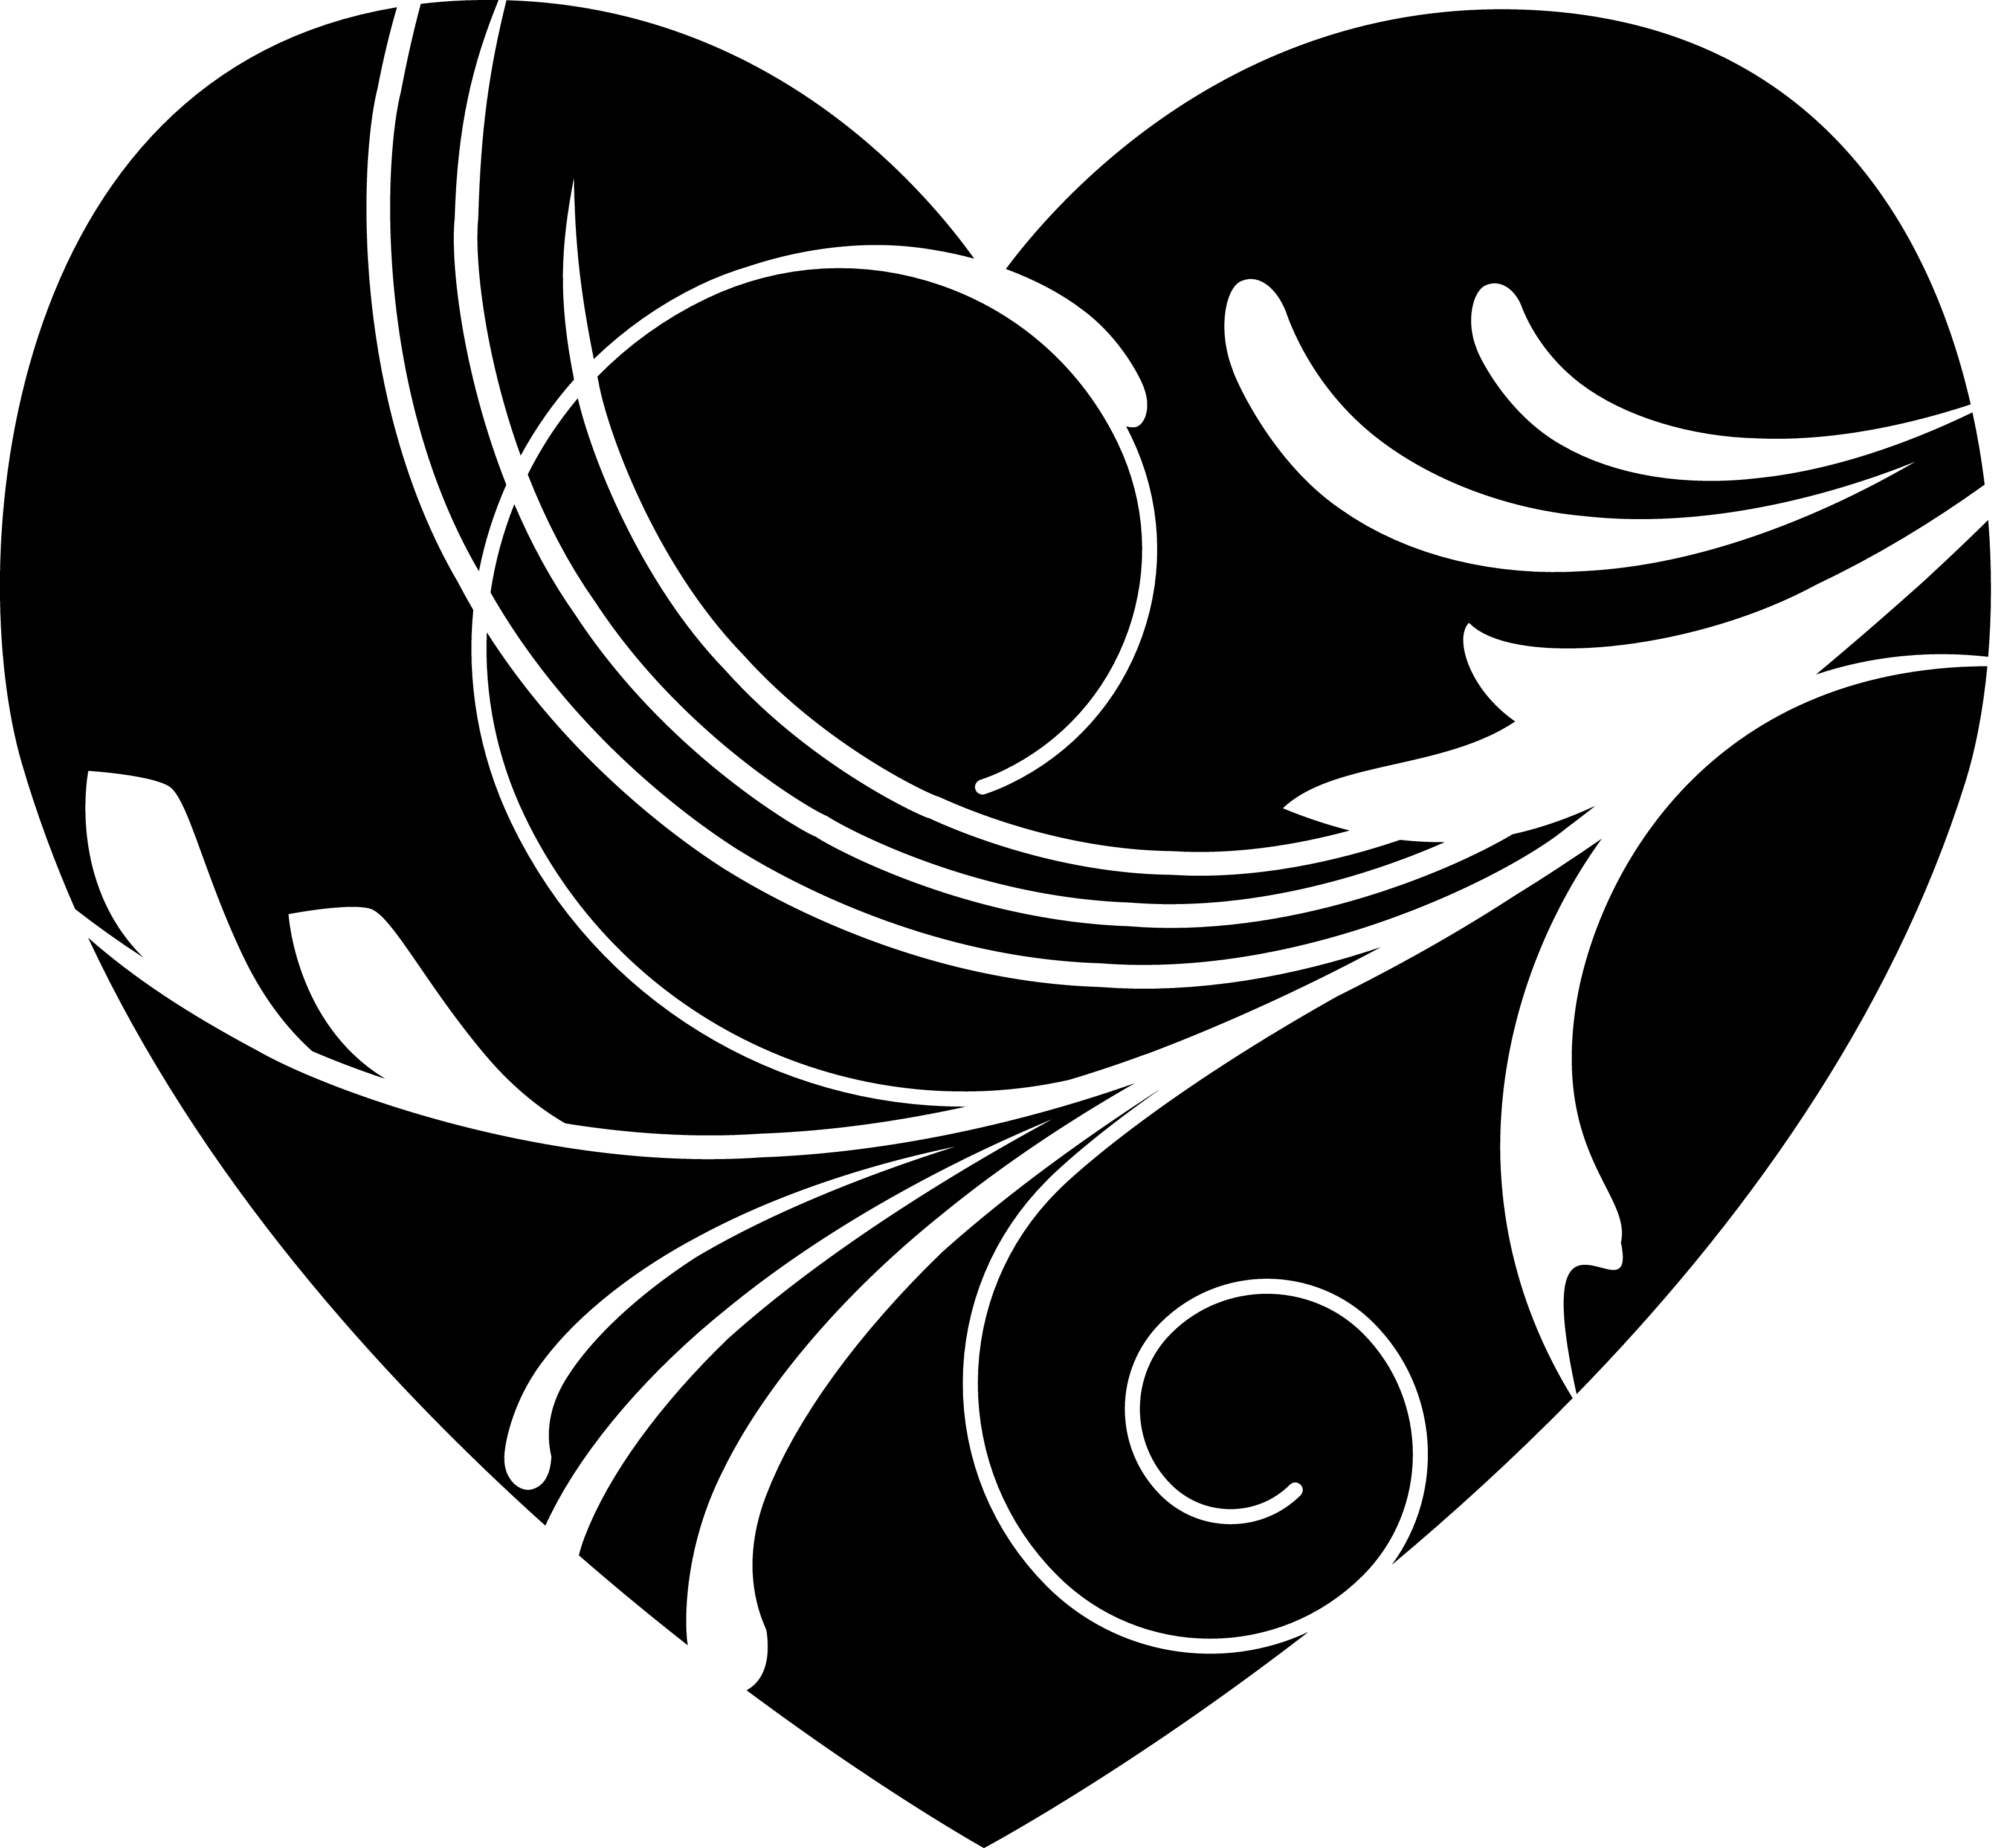 Heart Black and White Logo - Free White Heart Cliparts, Download Free Clip Art, Free Clip Art on ...